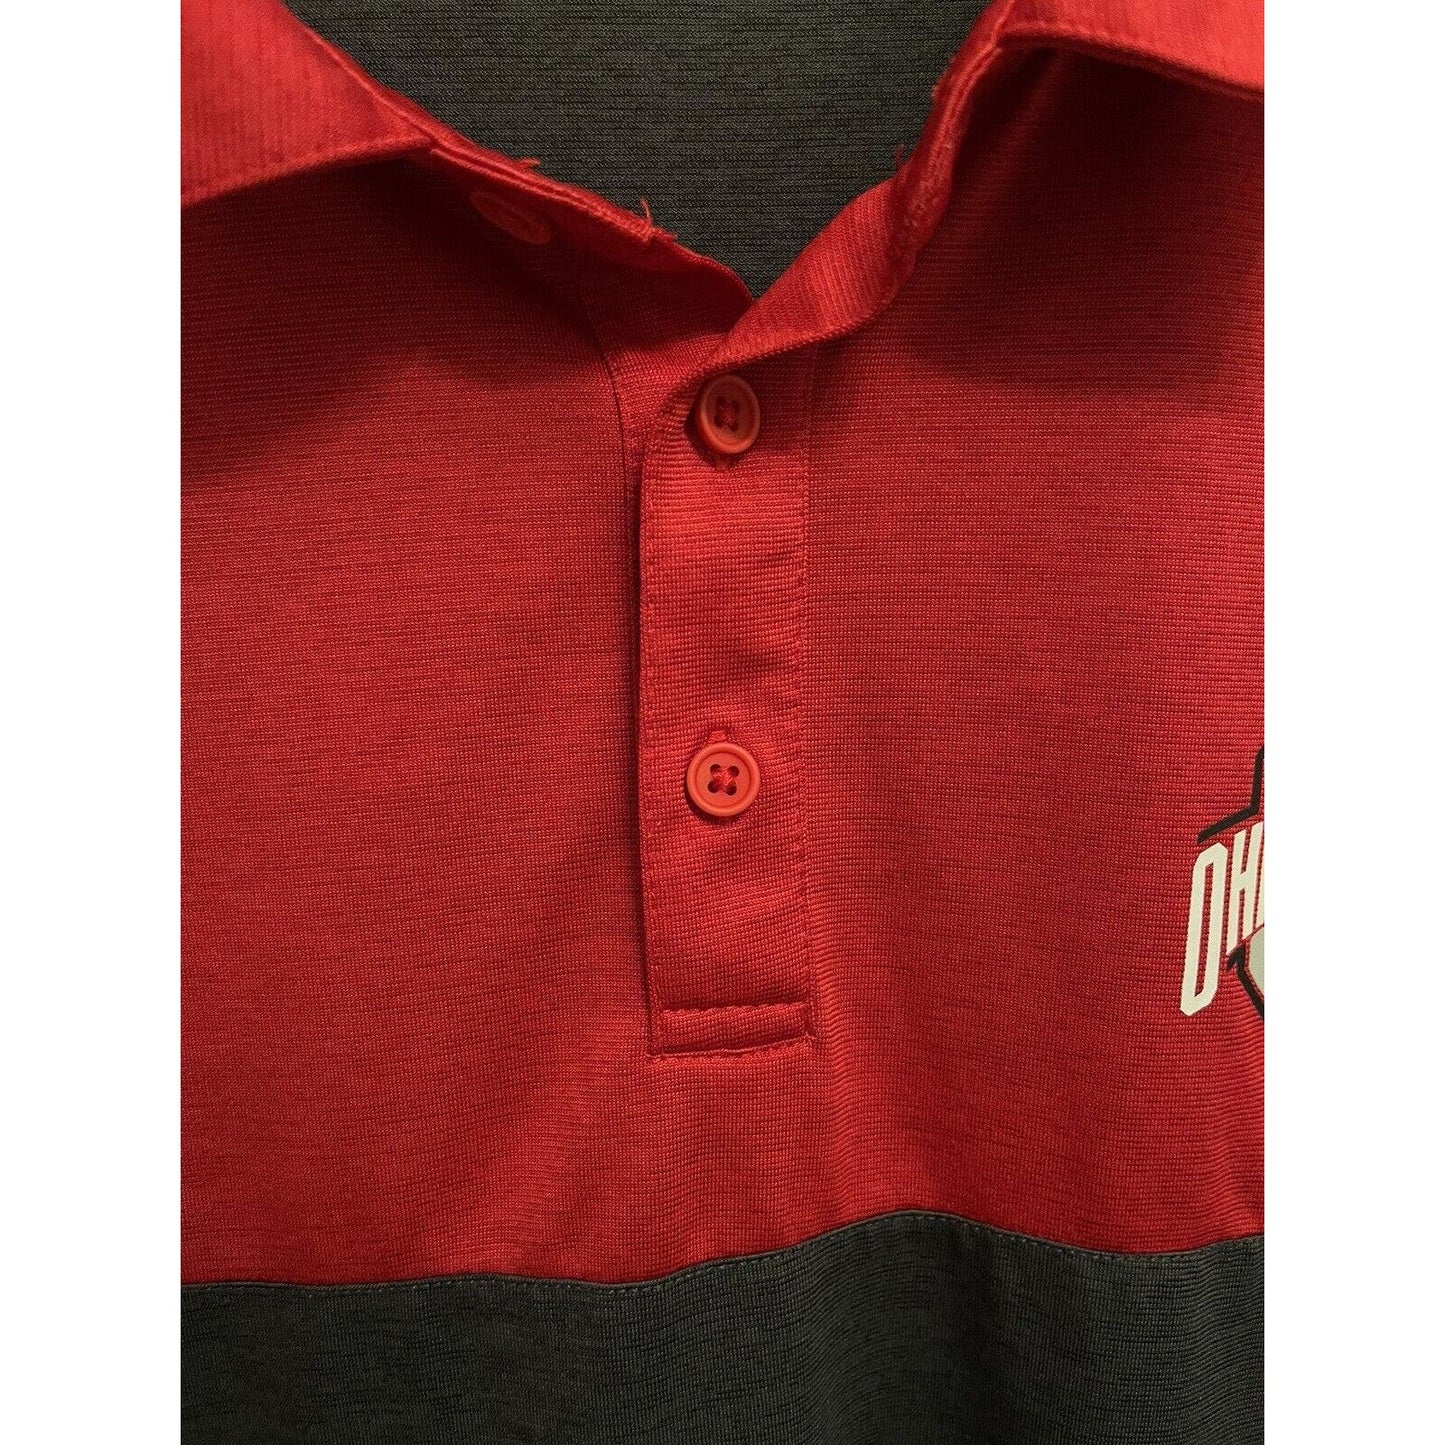 Men's Ohio State Polo Shirt - Size XL - Red & Gray - Collegiate